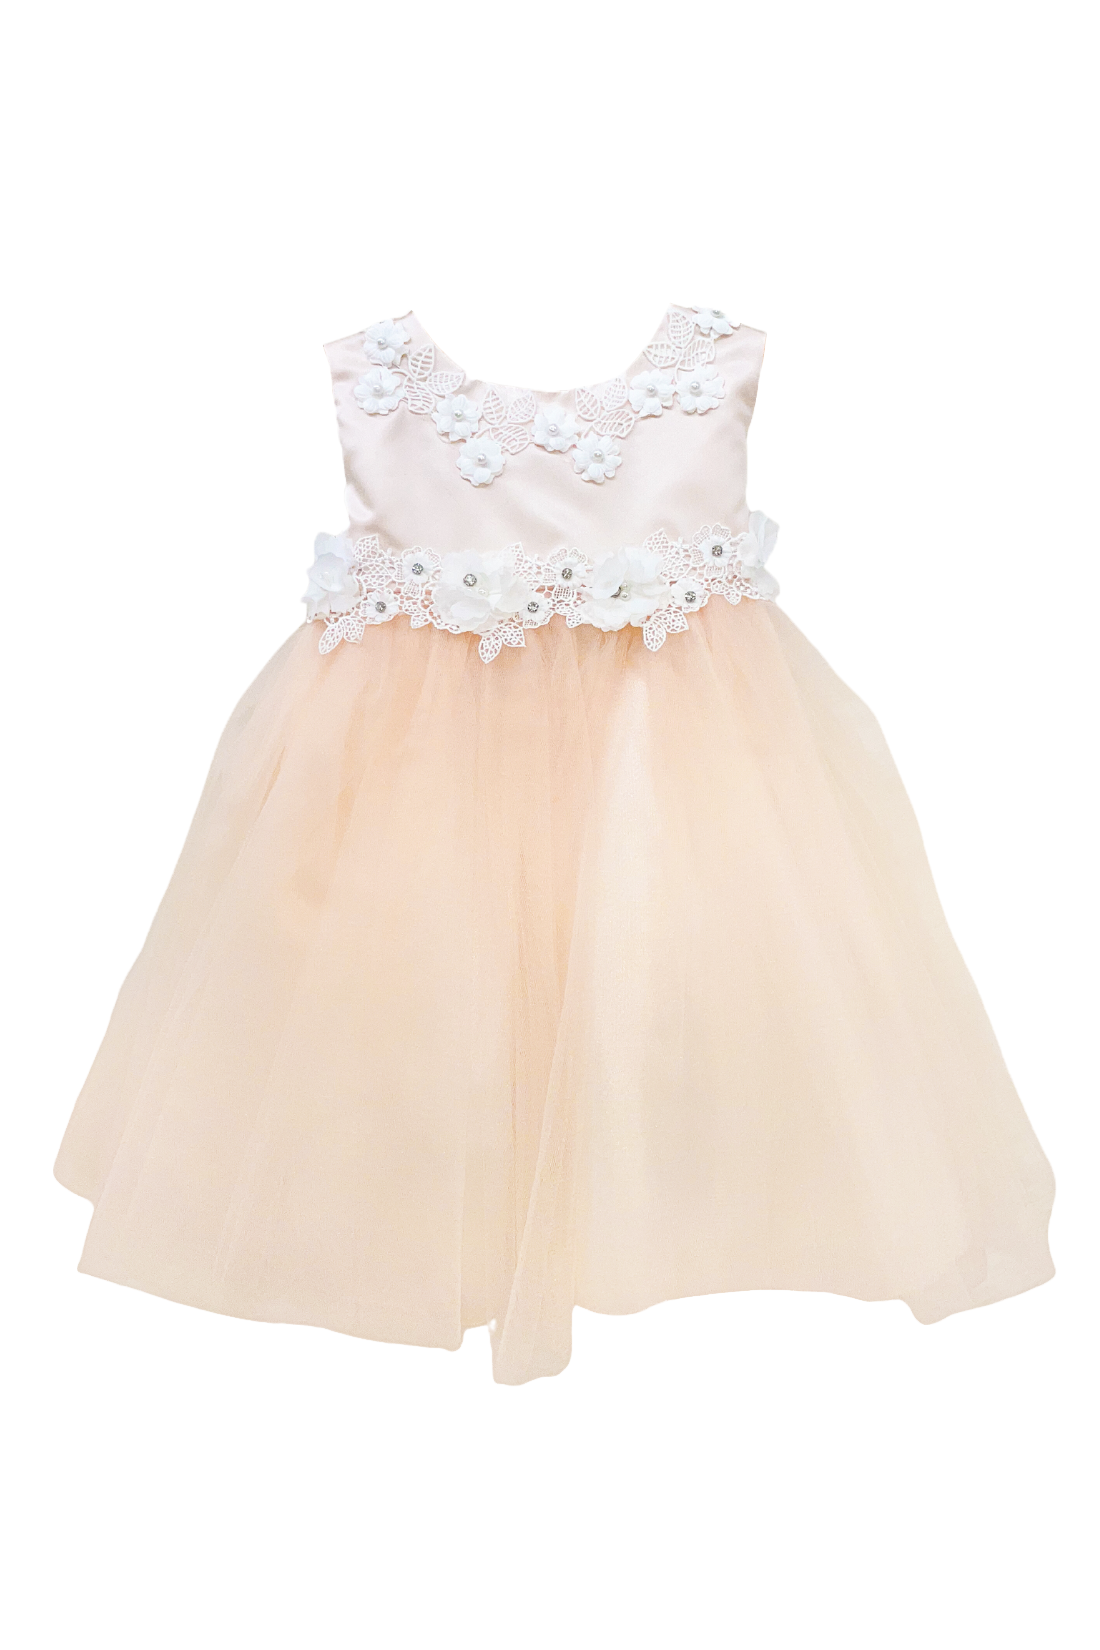 534 Princess Ballgown Baby Dress with Floral Trim